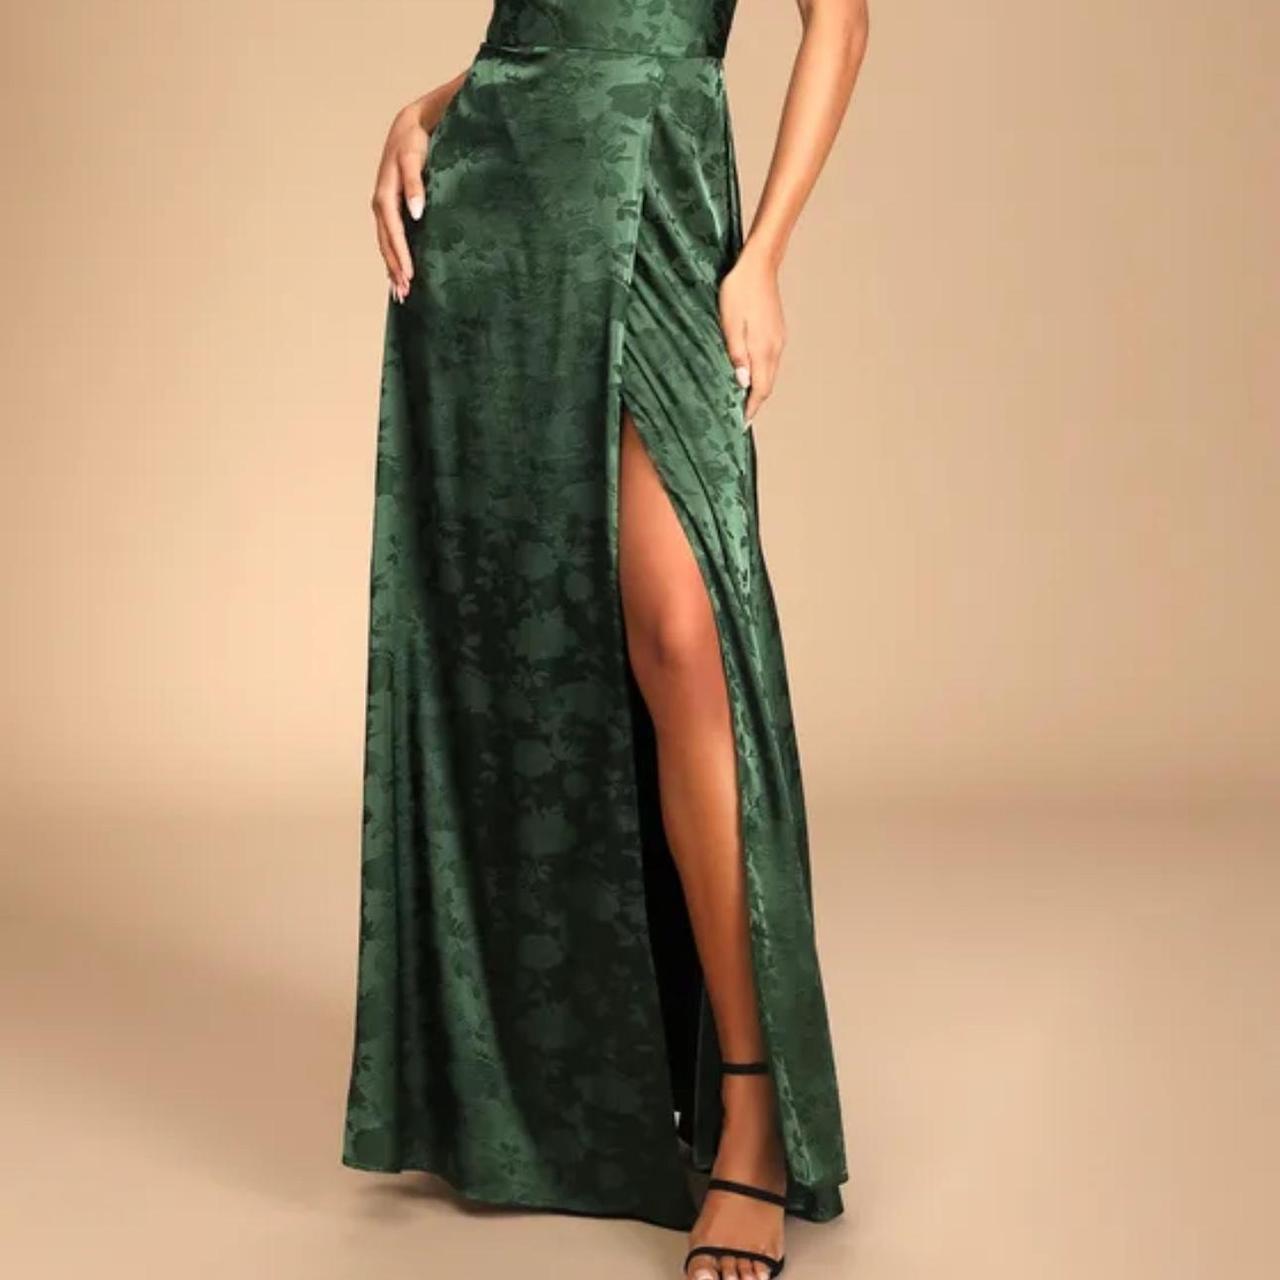 Simply Dreamy Emerald Green Satin Floral Jacquard Maxi Dress